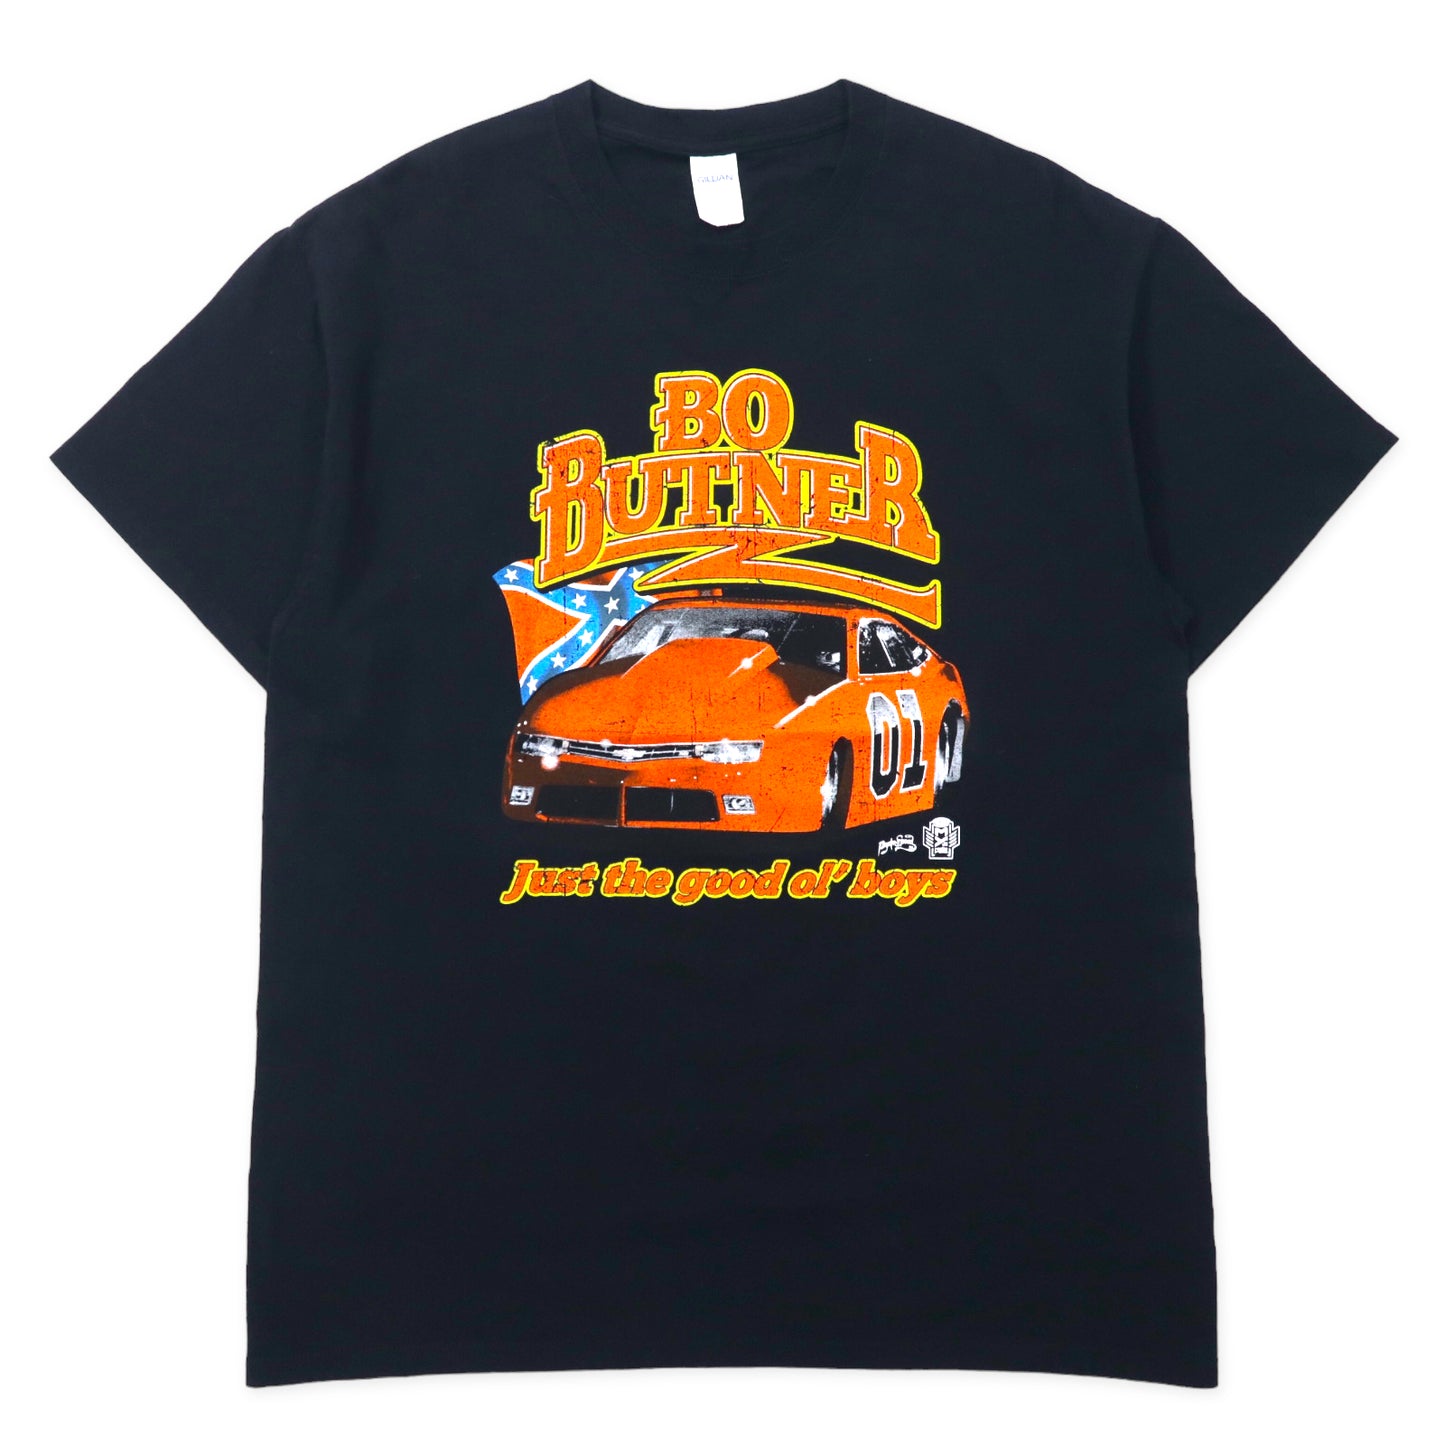 Gildan Racing Car Print T-Shirt L Black Cotton BOTNER